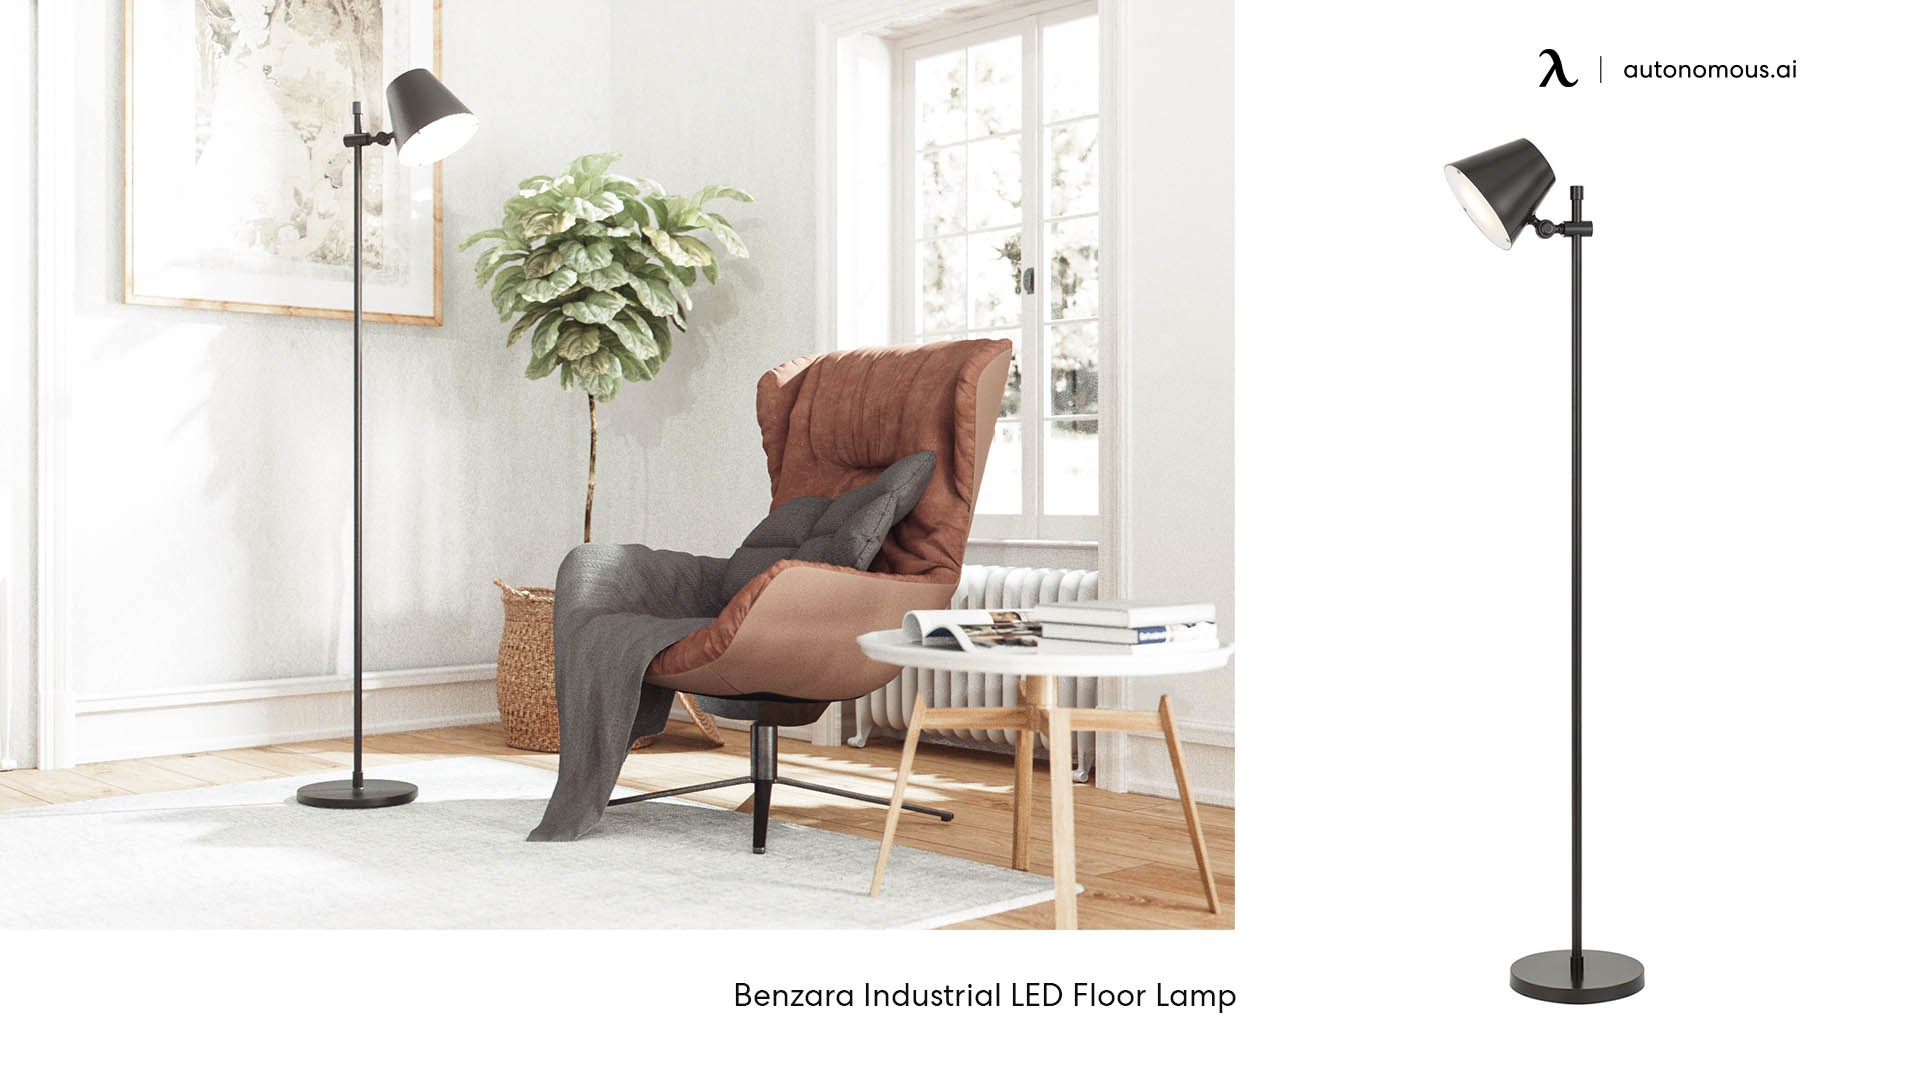 Is a Desk Lamp Better Than a Floor Lamp?